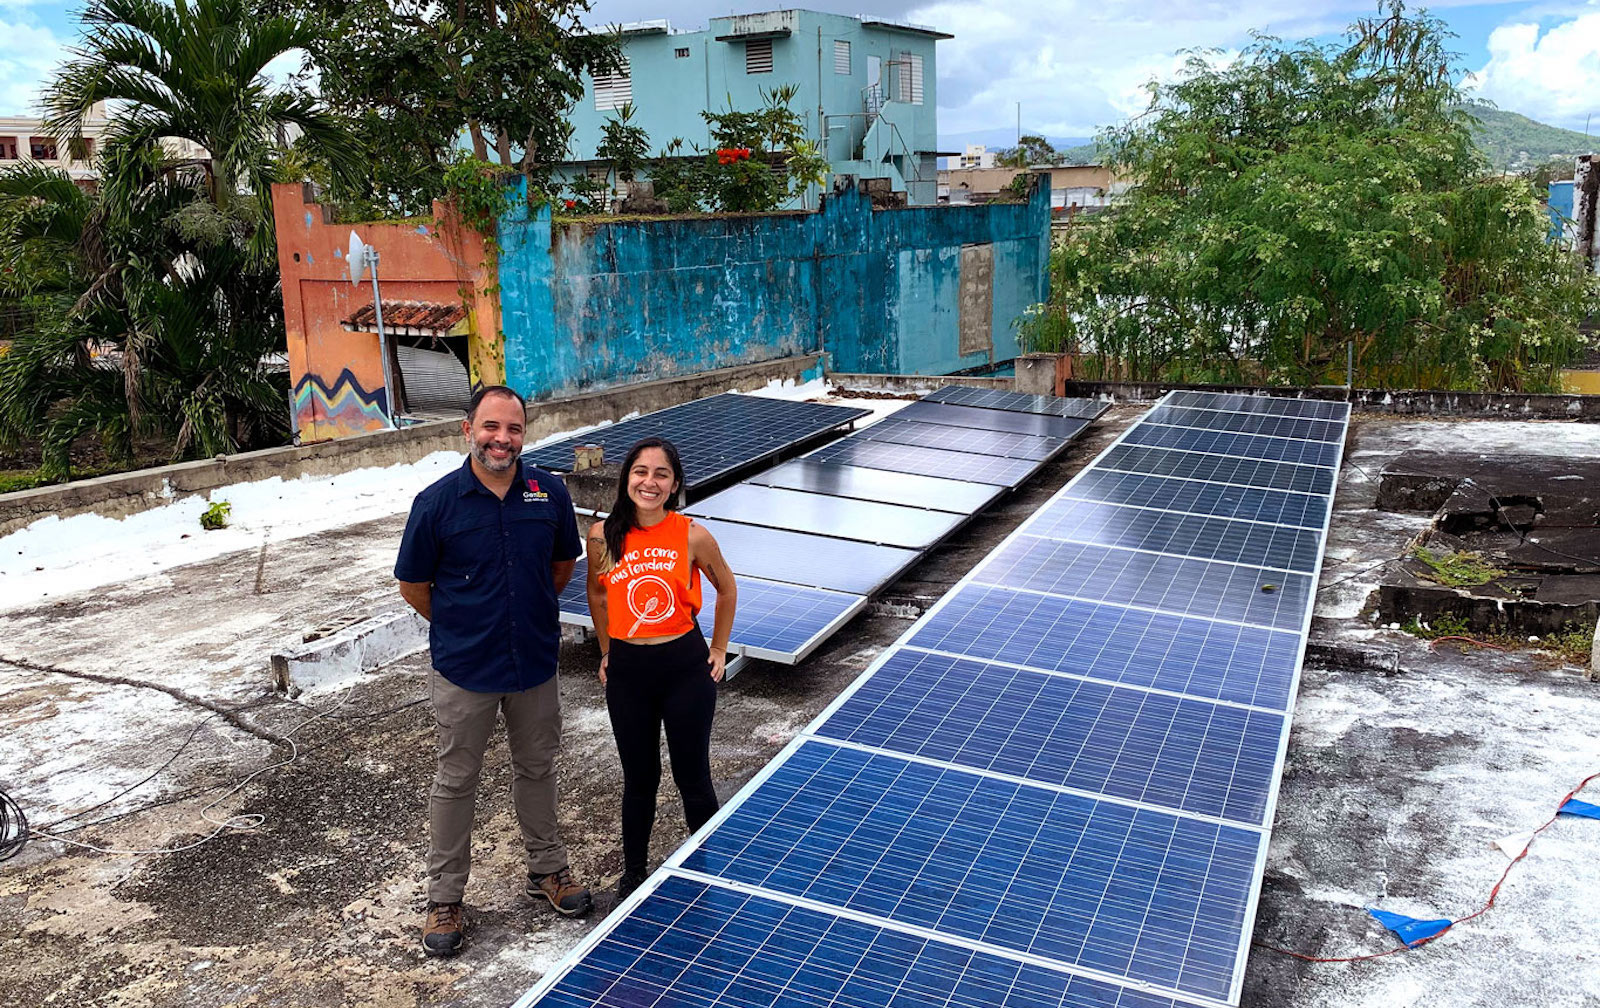 Raúl González, left, and Marisel Robles pose near solar panels.